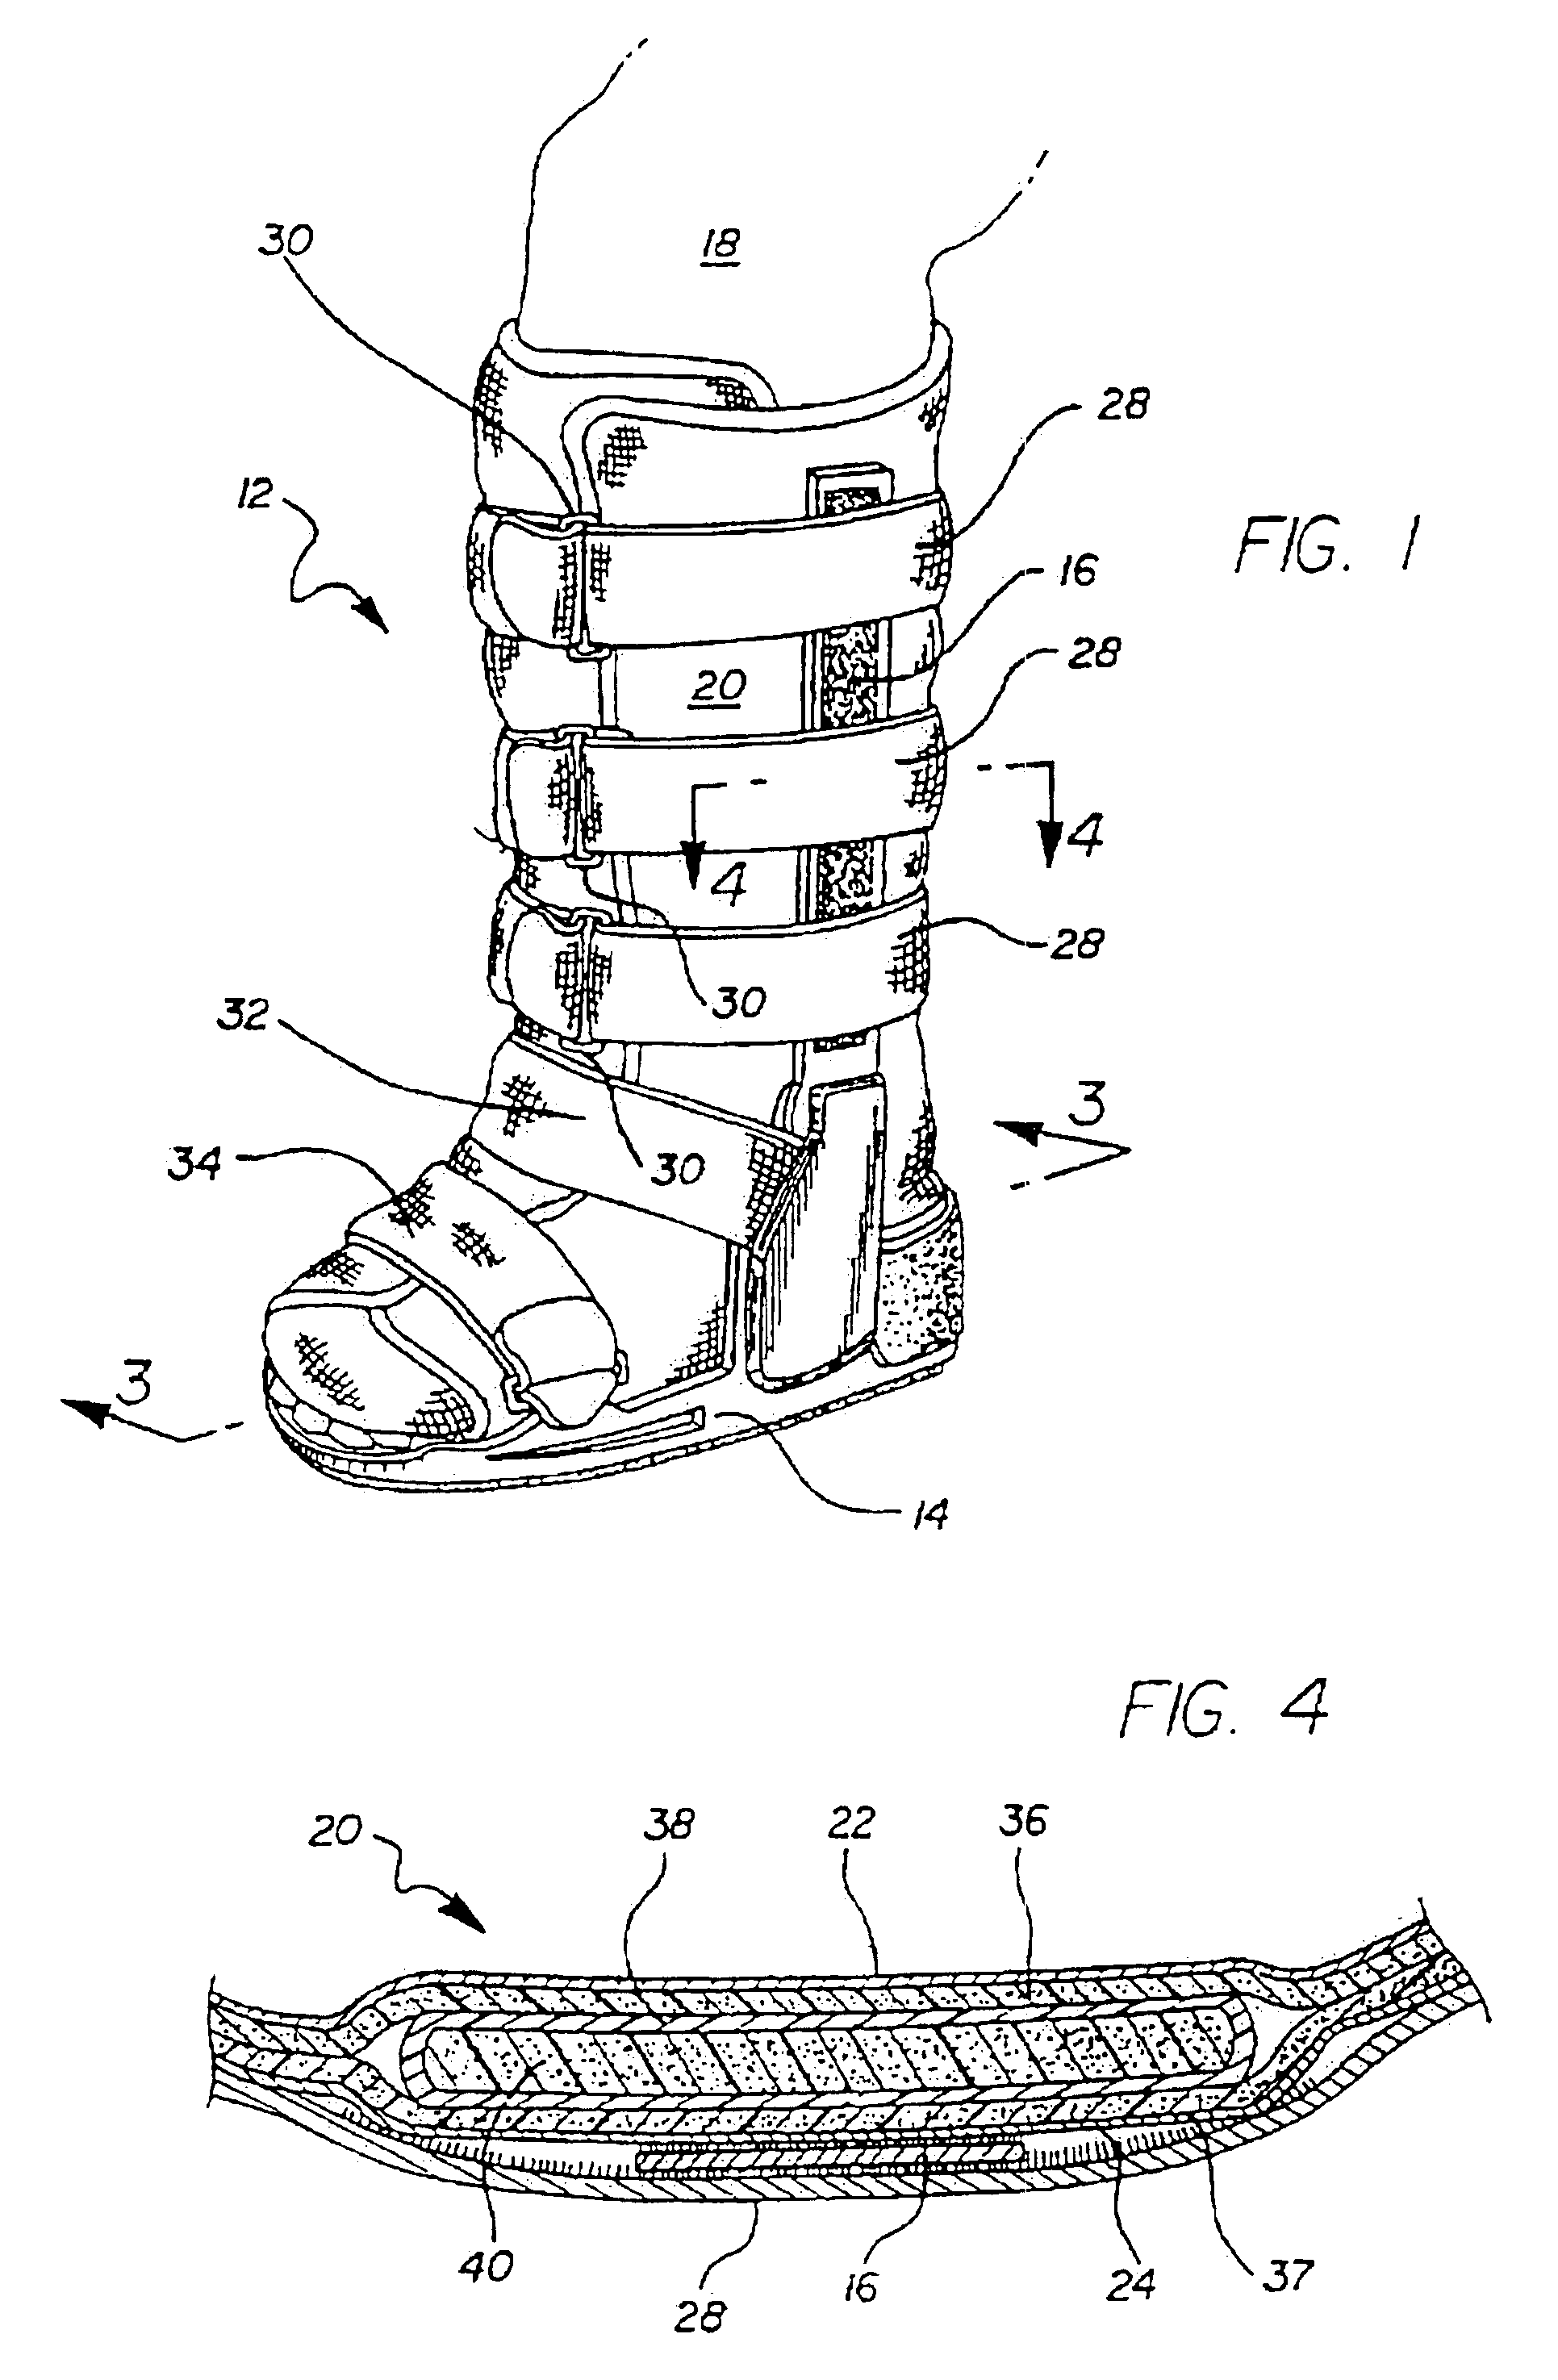 Footgear with pressure relief zones